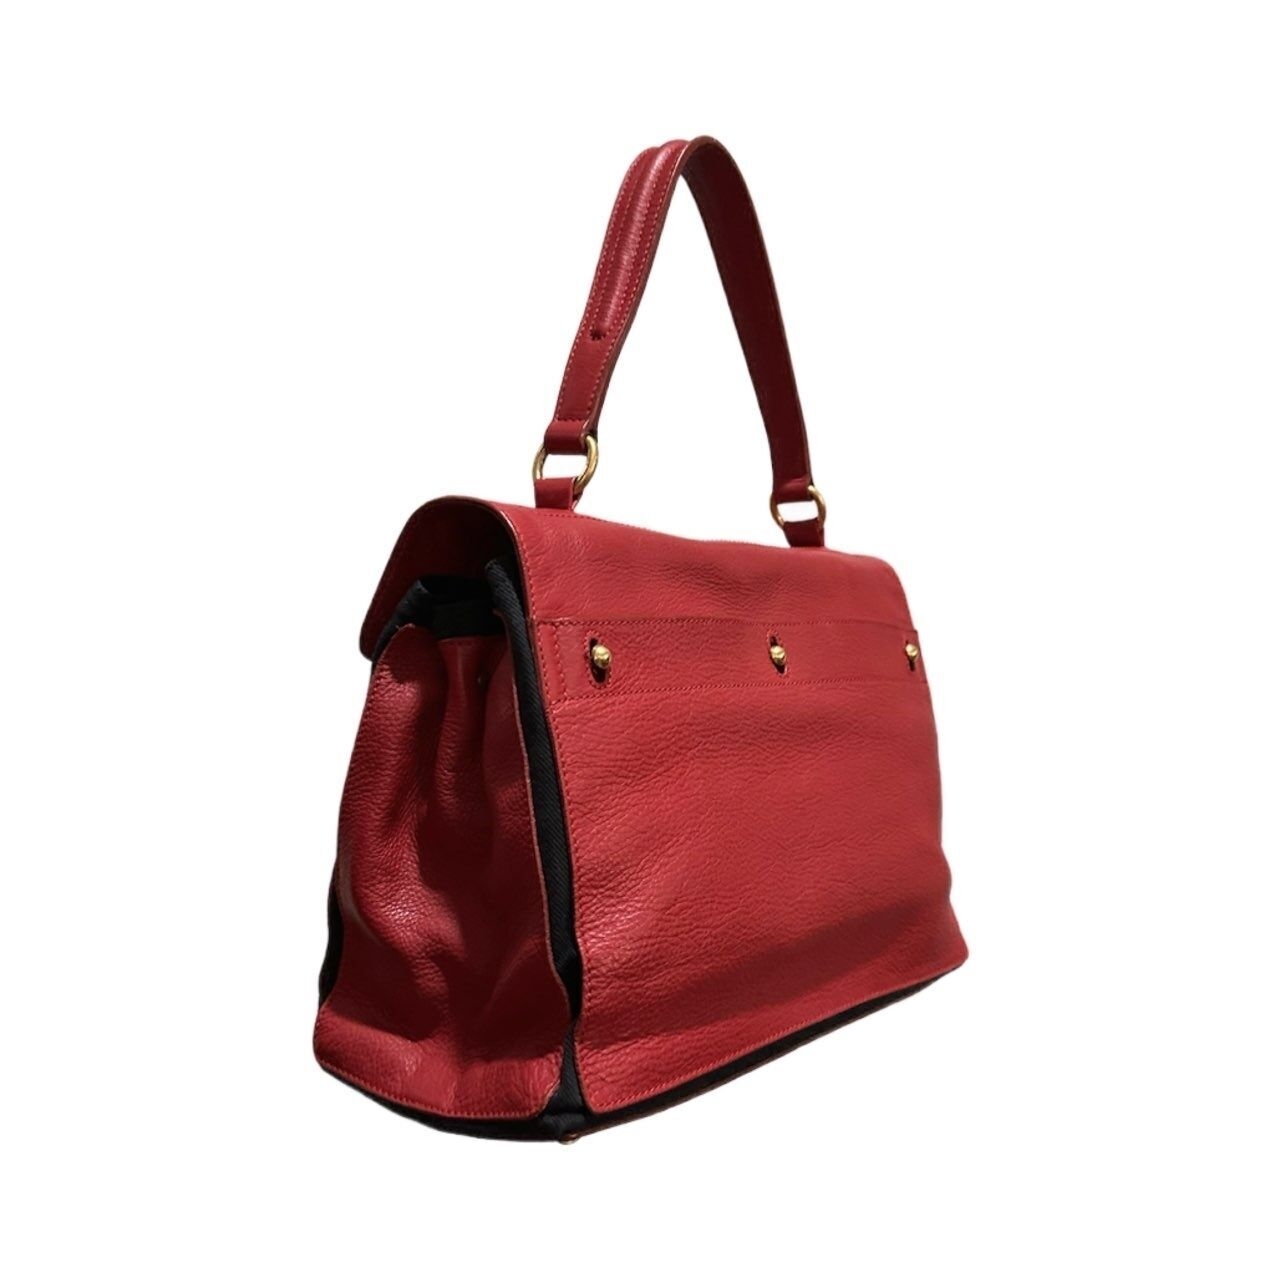 Yves Saint Laurent Red Tote Bag